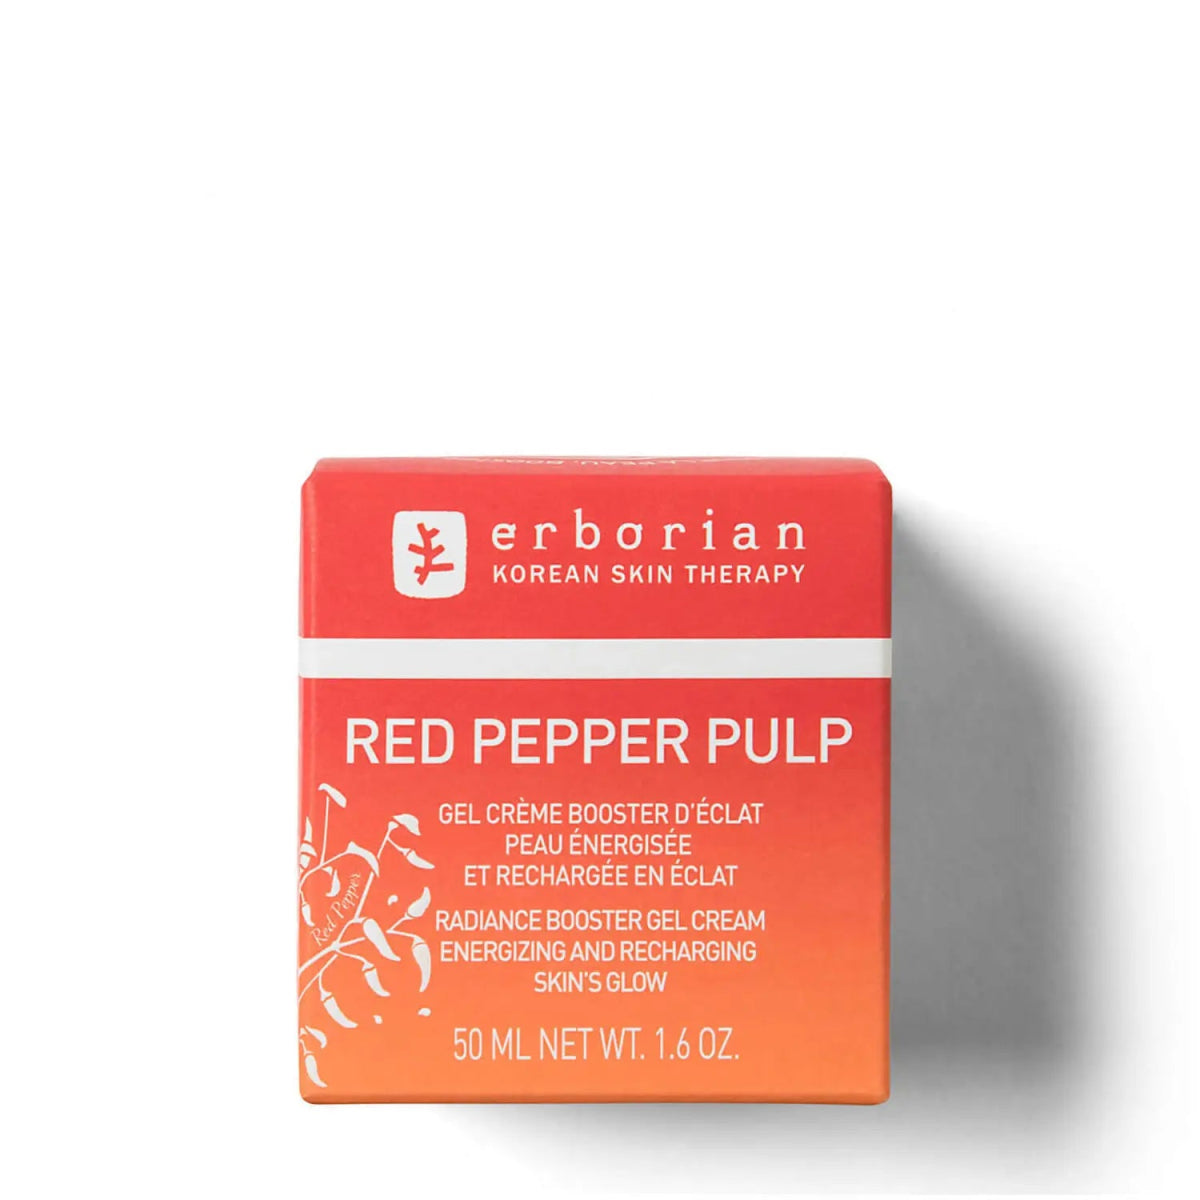 Red Pepper Pulp - Crema viso illuminante - Infinity Concept Store